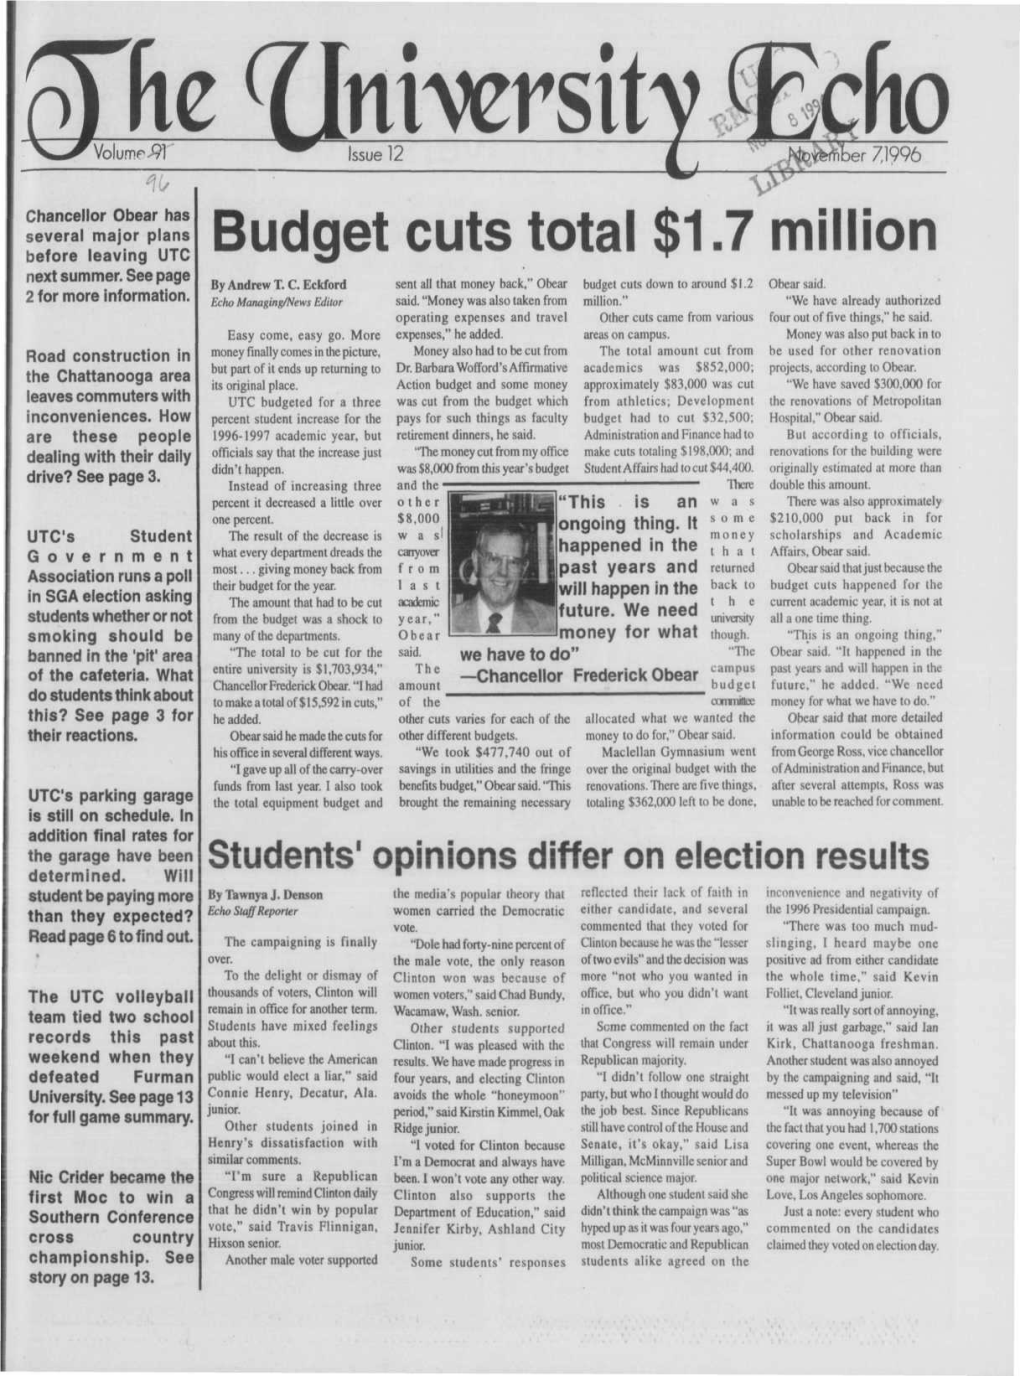 Budget Cuts Total $1.7 Million Next Summer